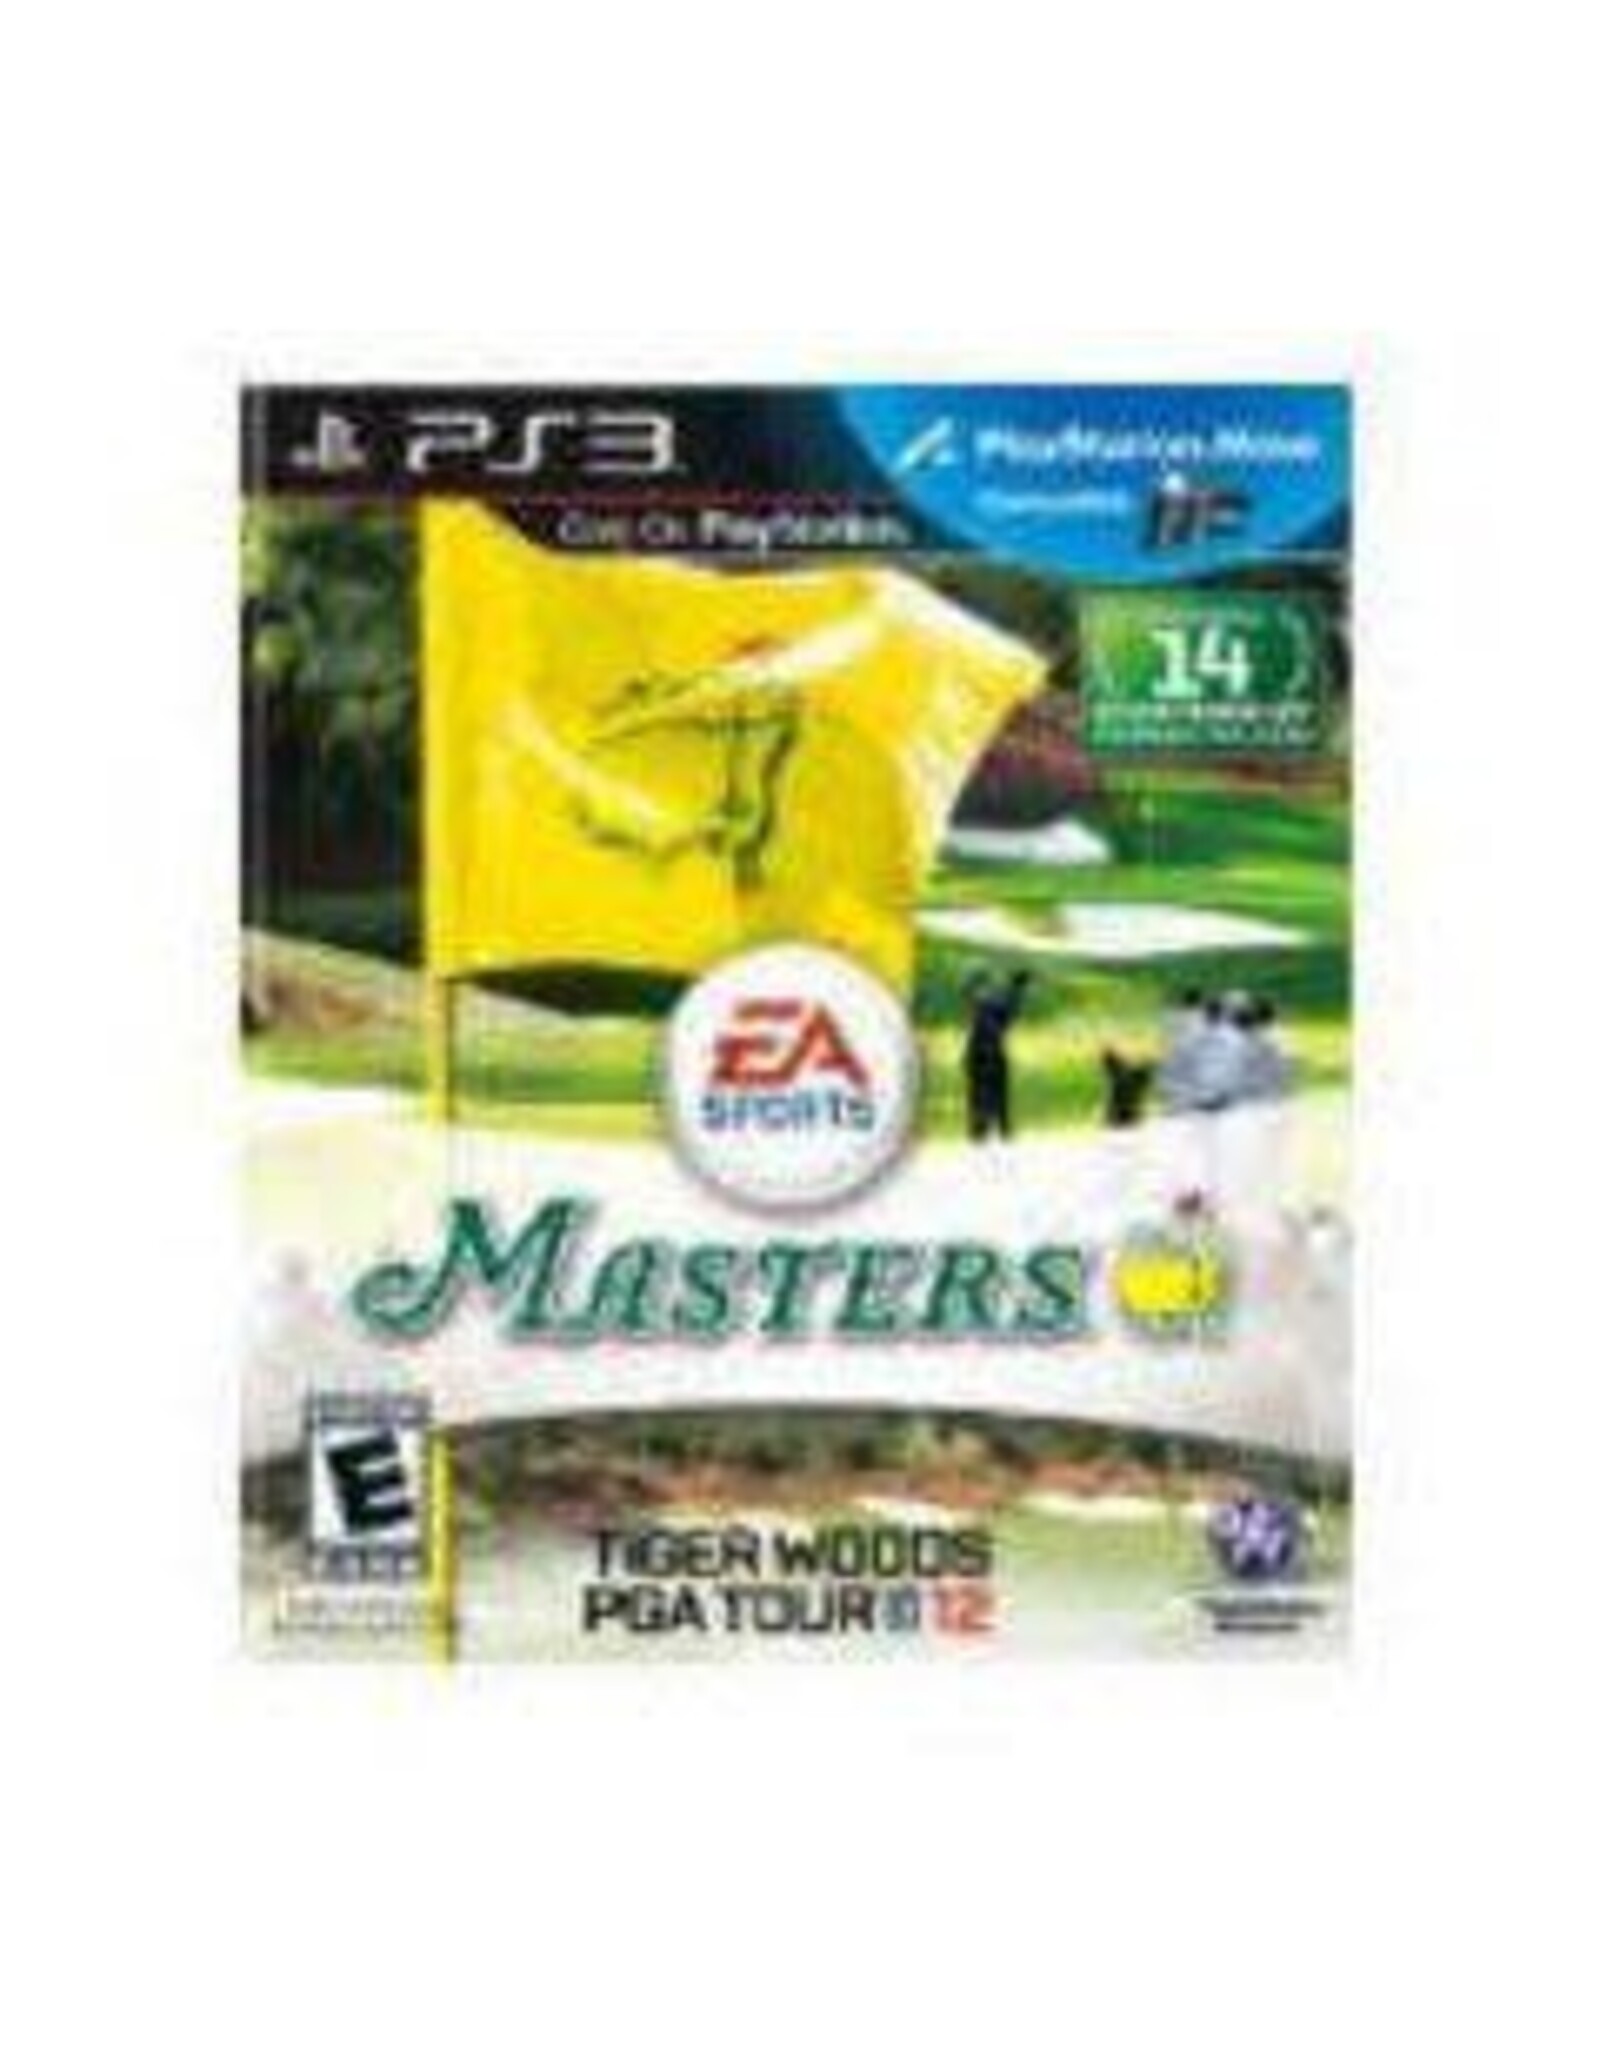 Playstation 3 Tiger Woods PGA Tour 12: The Masters (CiB, Water Damaged Sleeve)